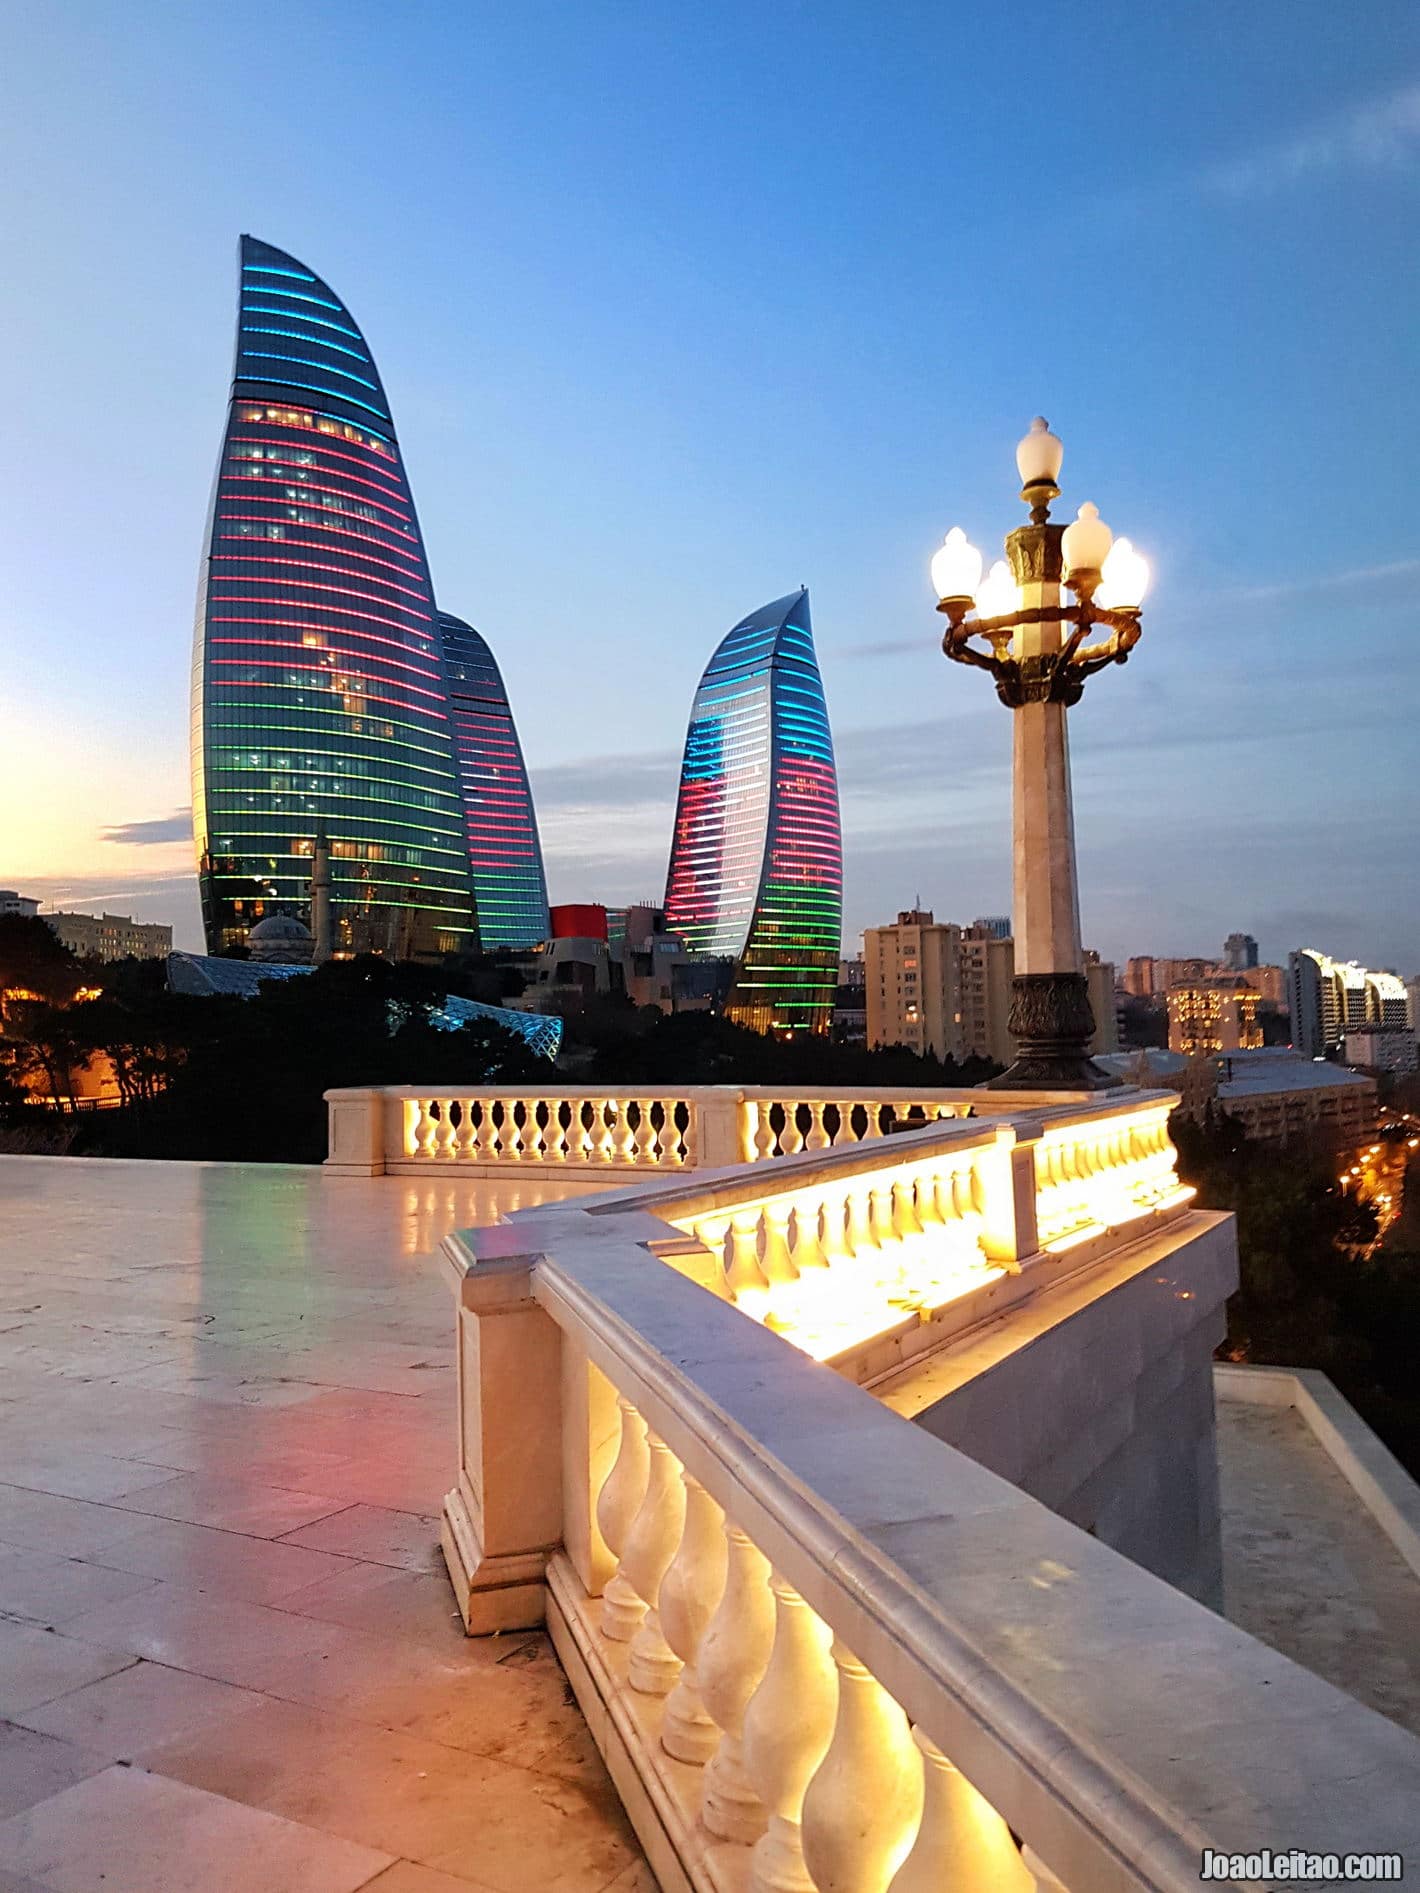 Online dating free sites in Baku best Azerbaijan Dating